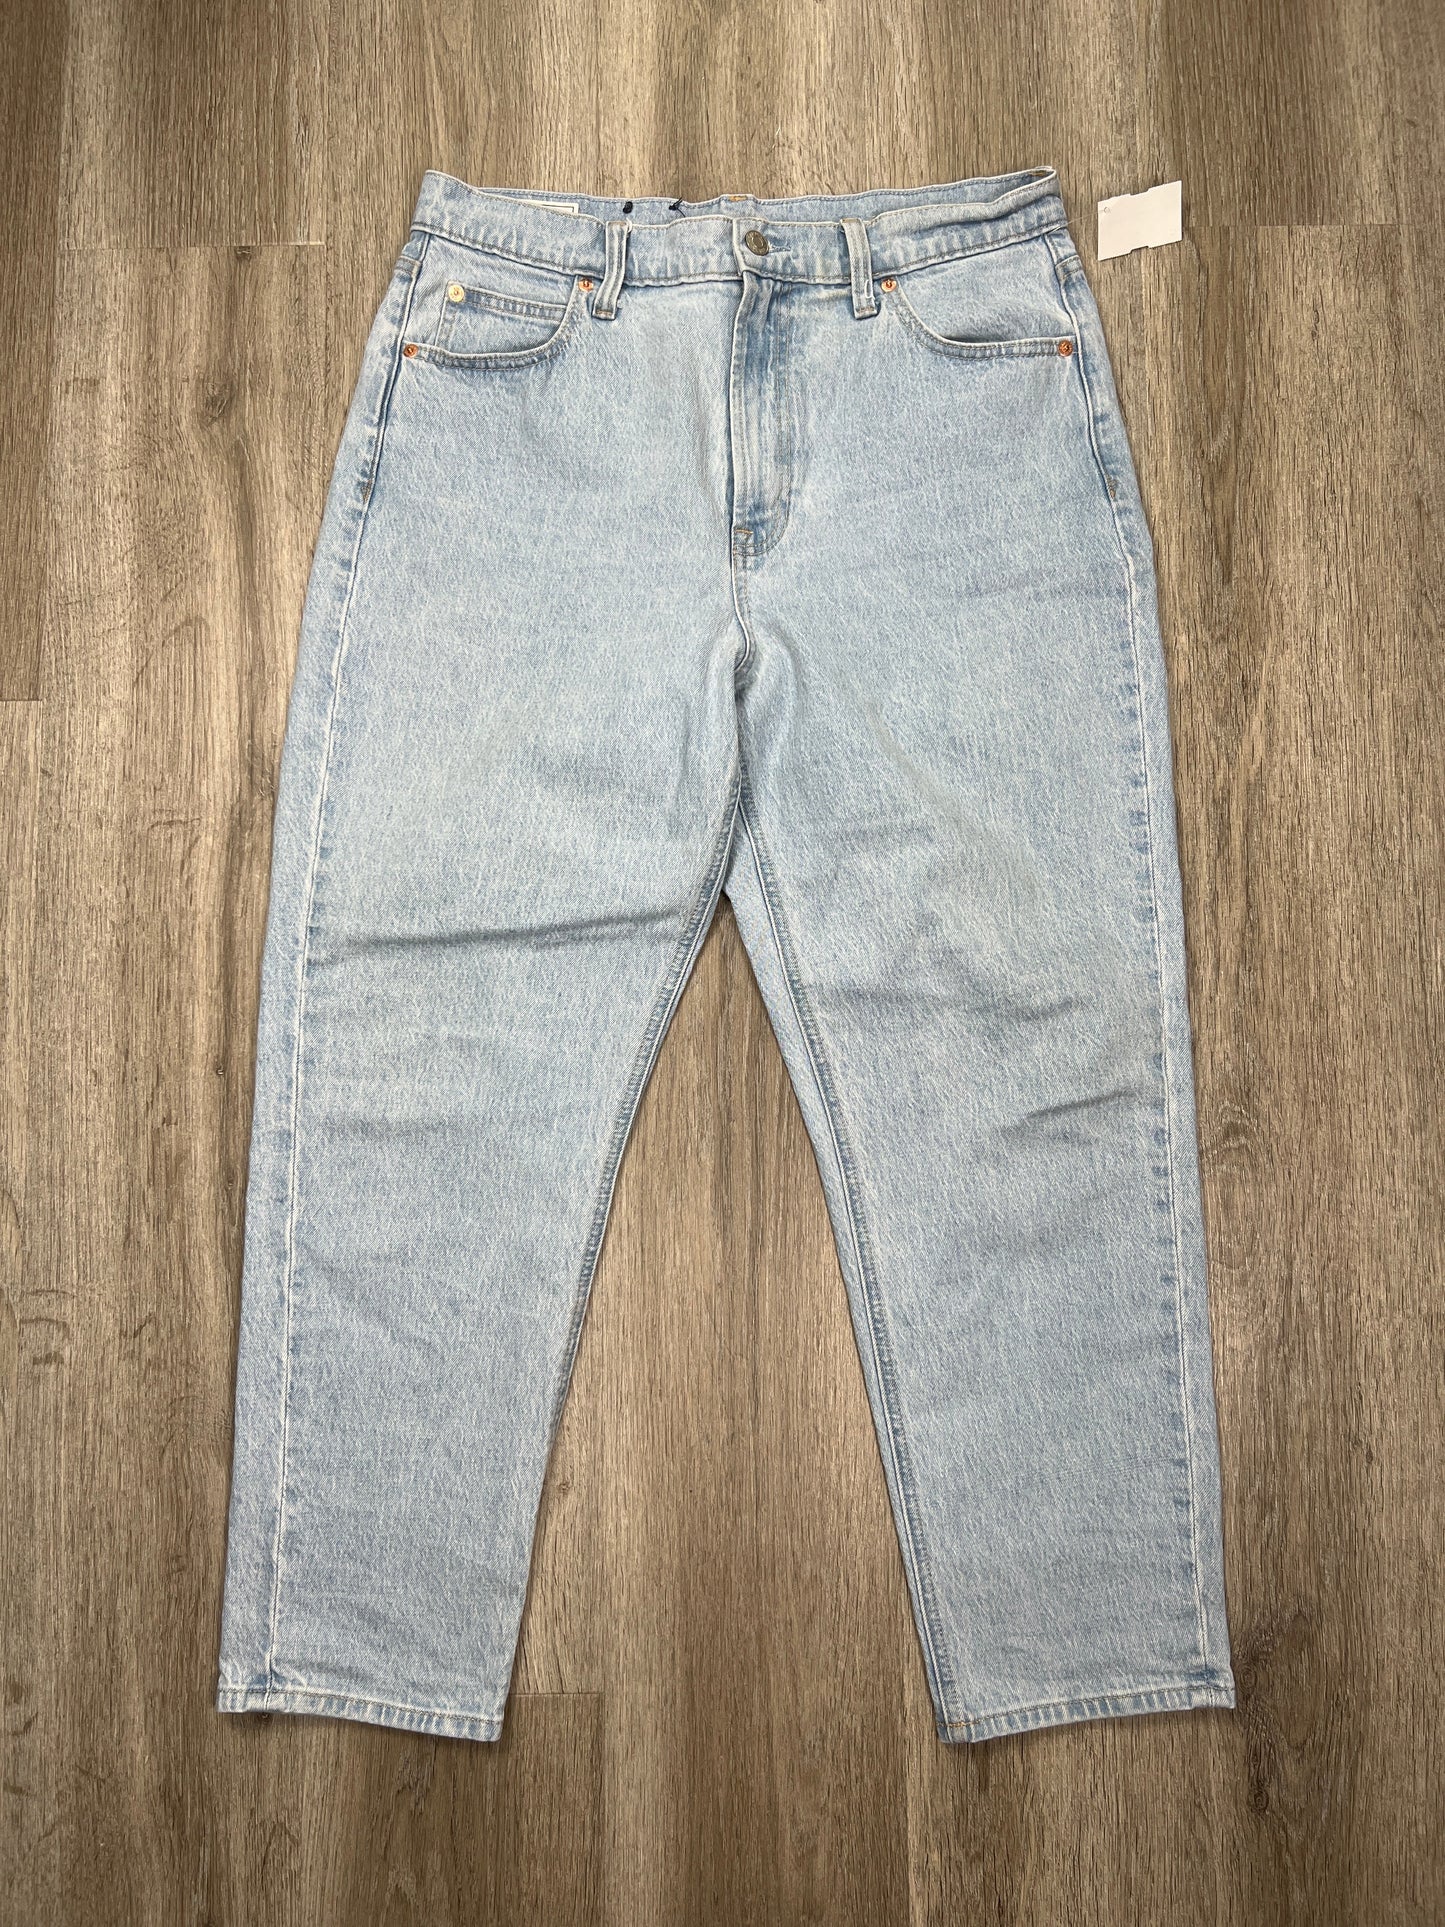 Blue Denim Jeans Boyfriend Gap, Size 12